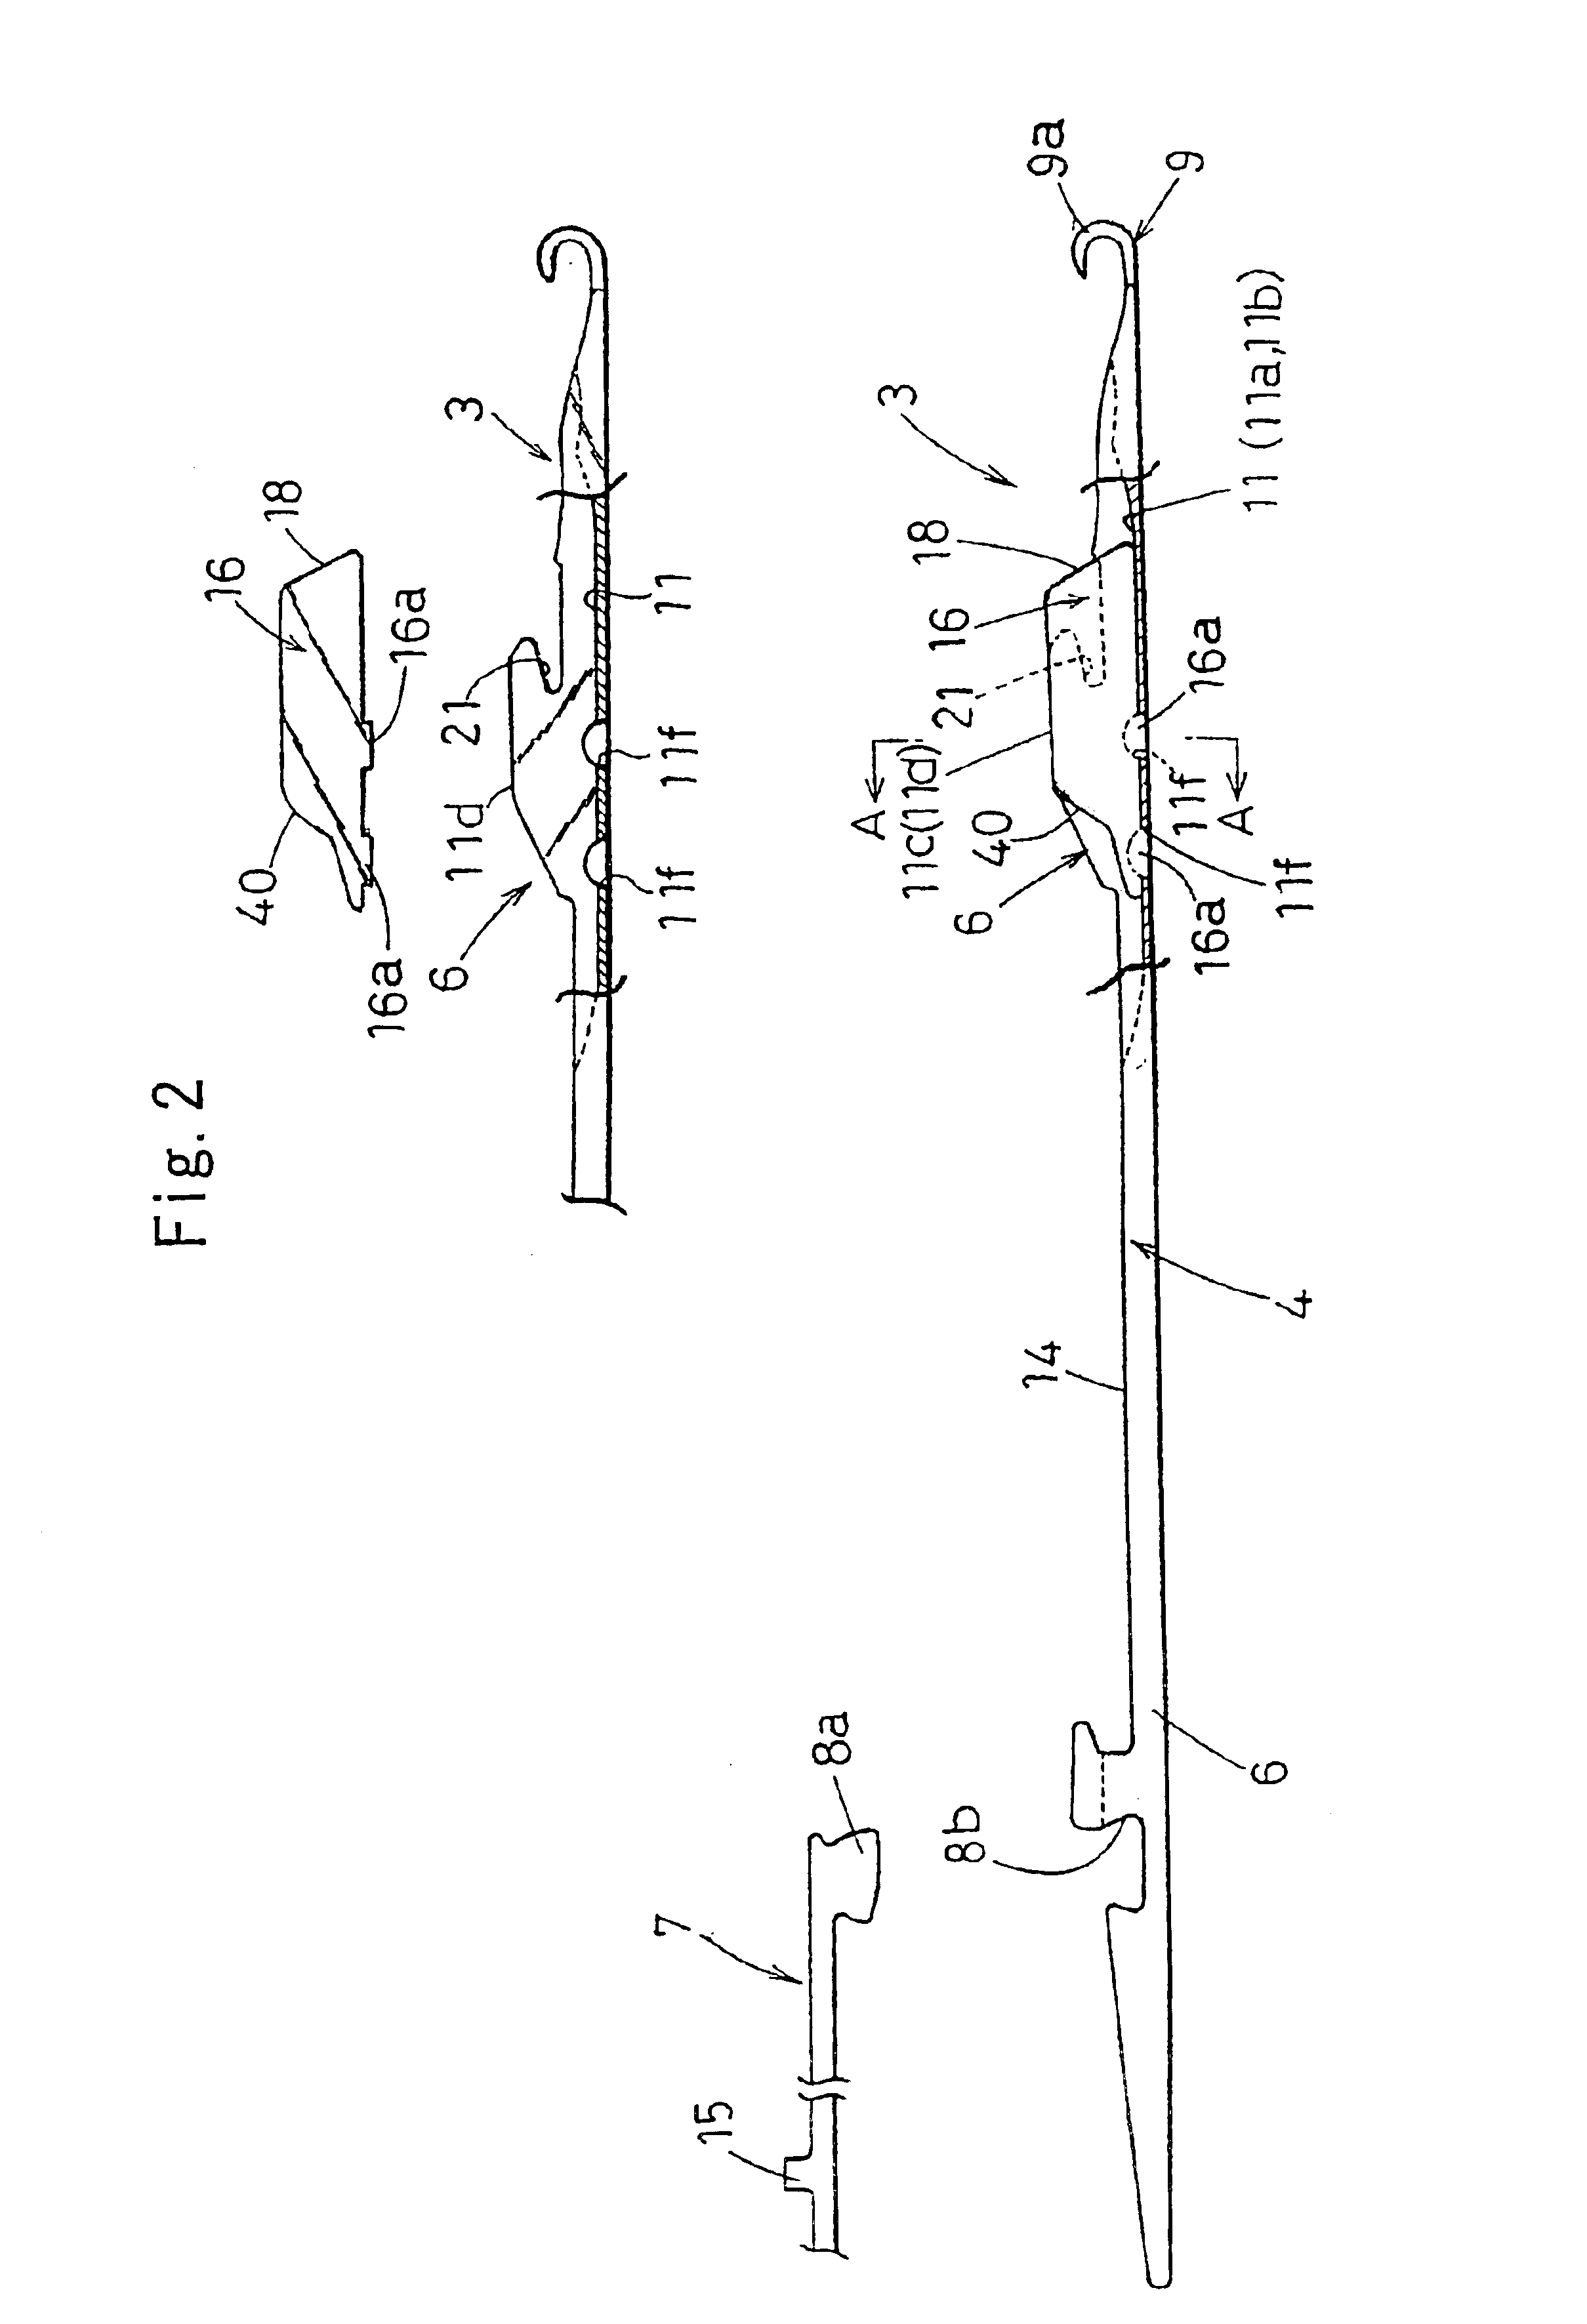 Composite needle of knitting machine